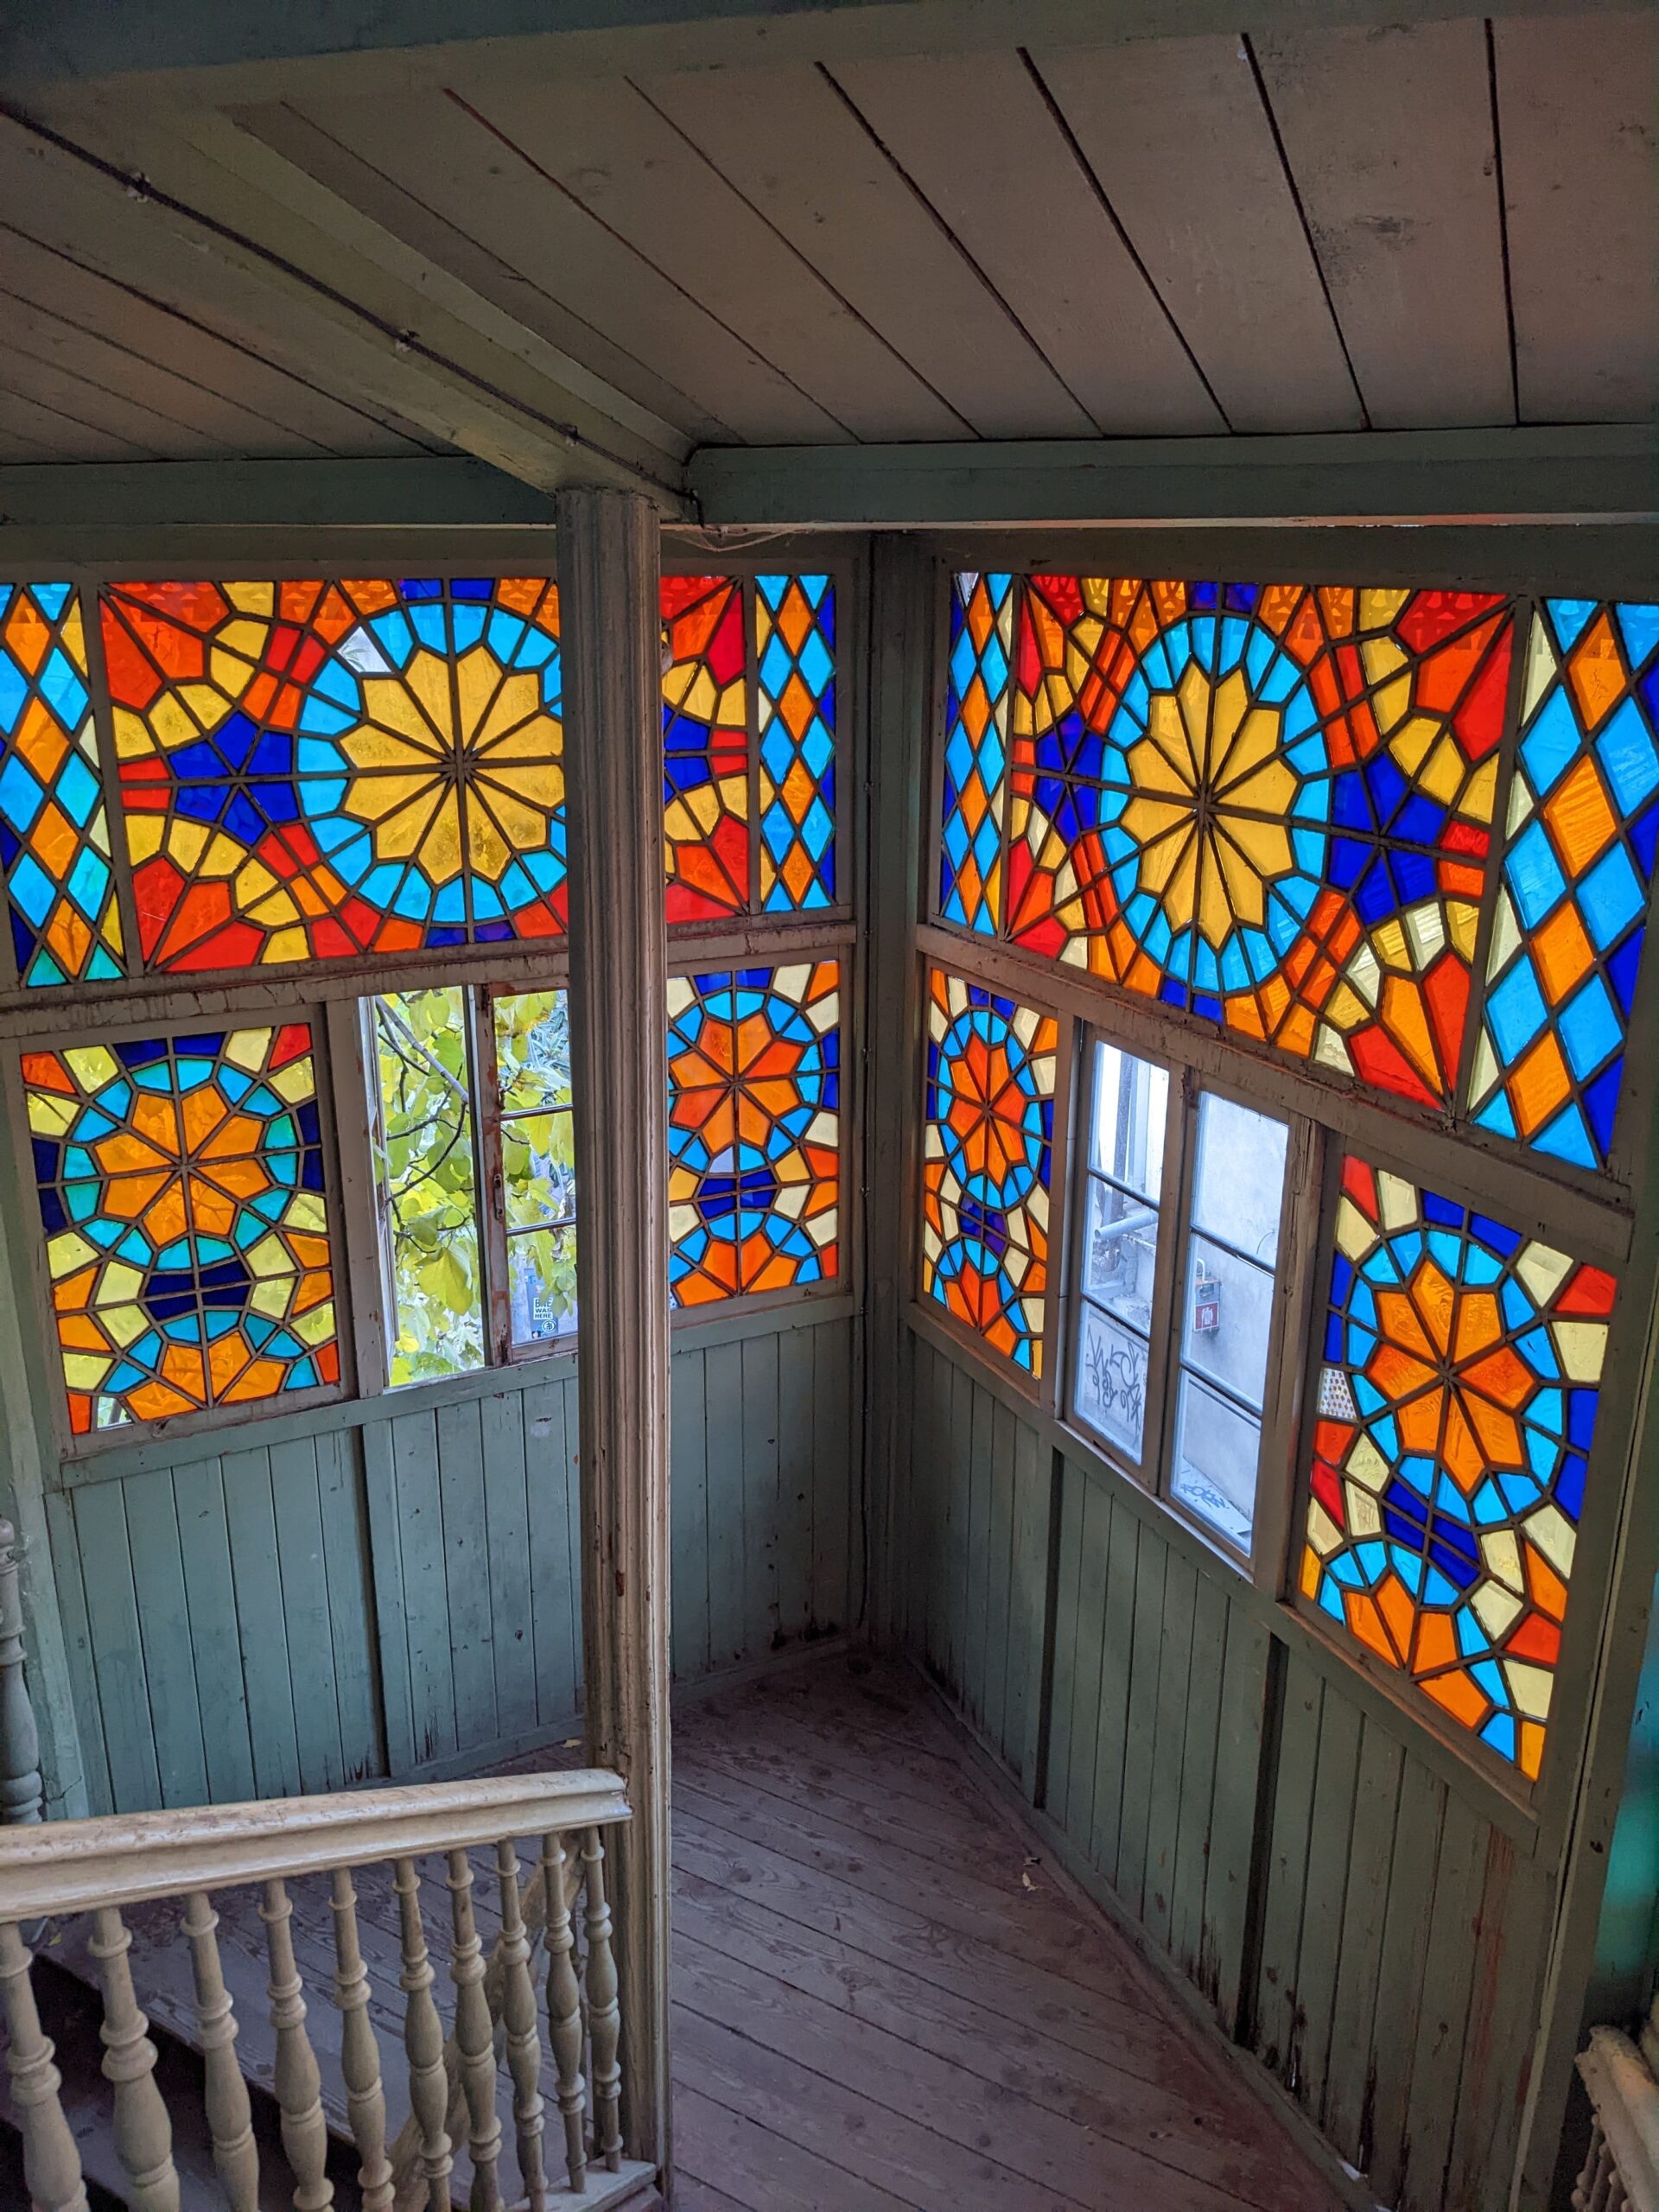 colourful windows, tbilisi gallery 27